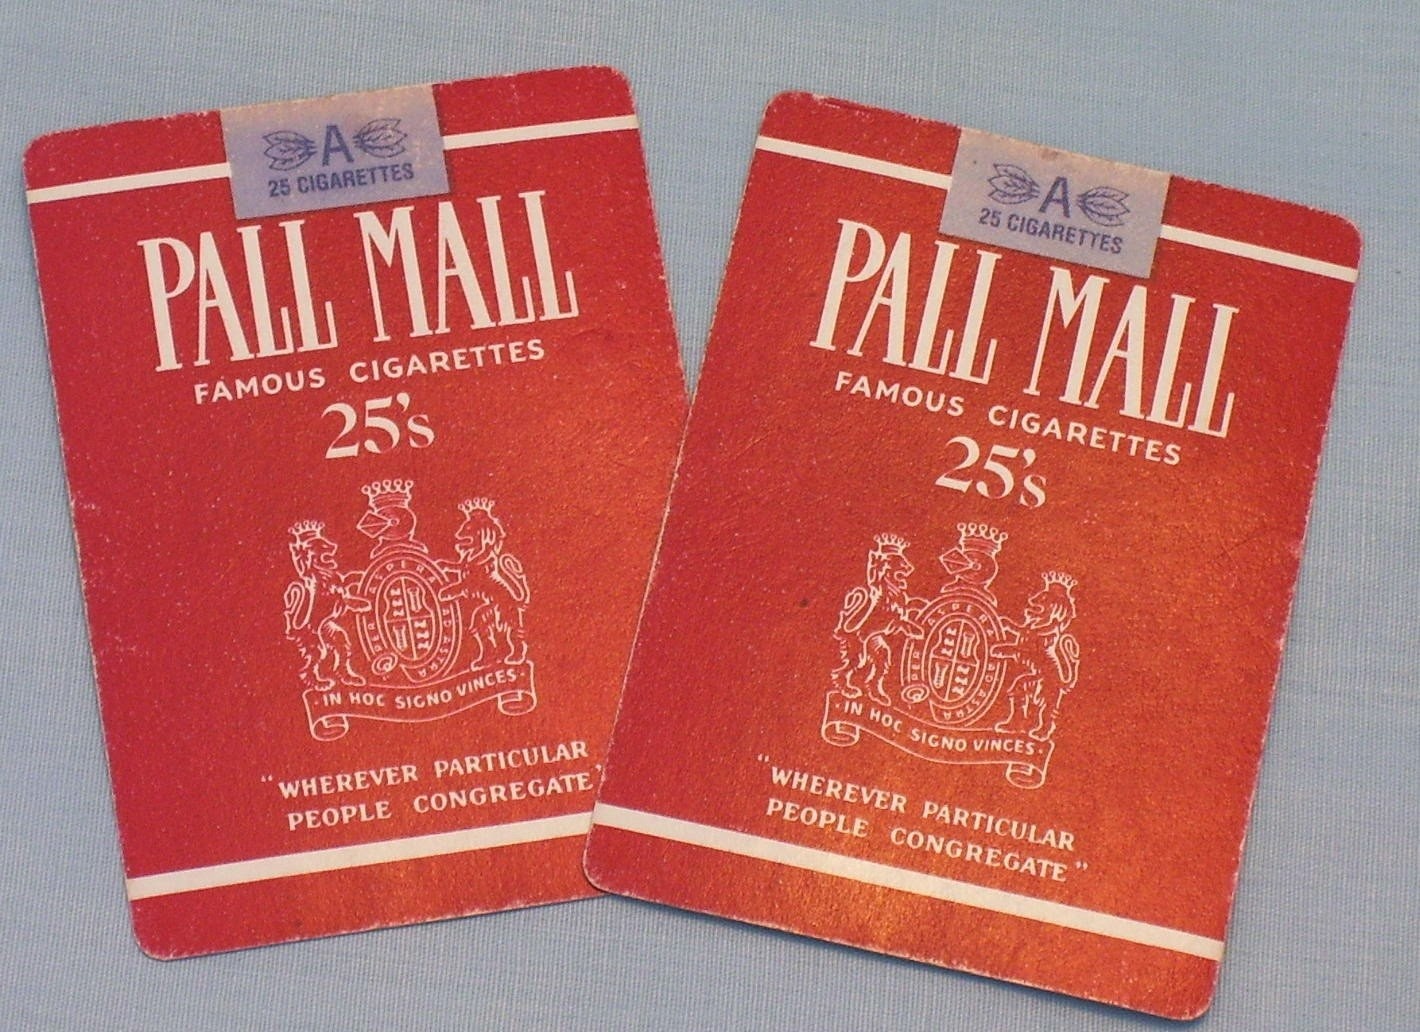 Printable Cigarette Coupons 2019: Free Pall Mall Cigarette Coupons - Free Pack Of Cigarettes Printable Coupon